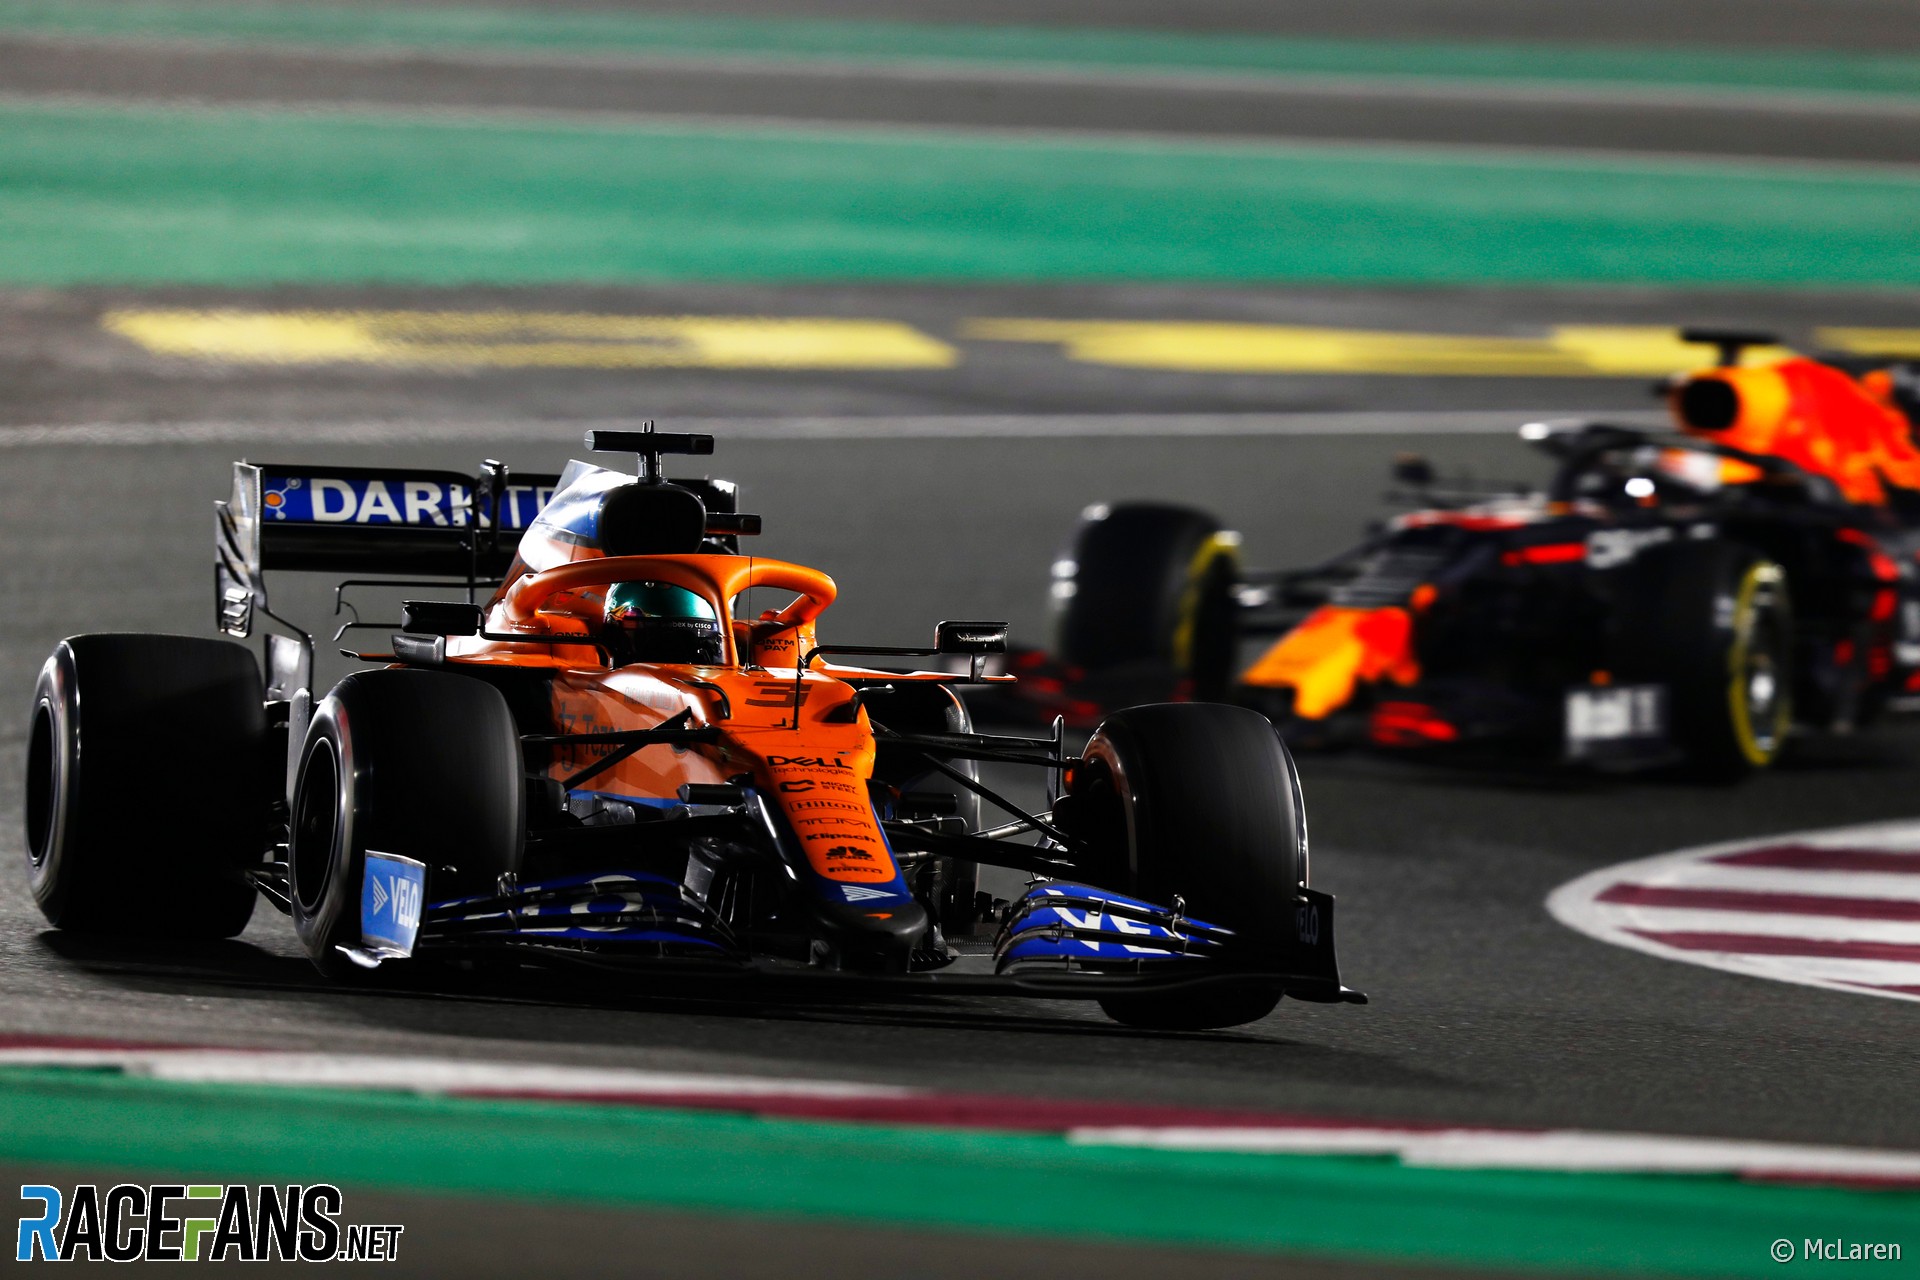 Daniel Ricciardo, McLaren, Losail International Circuit, 2021